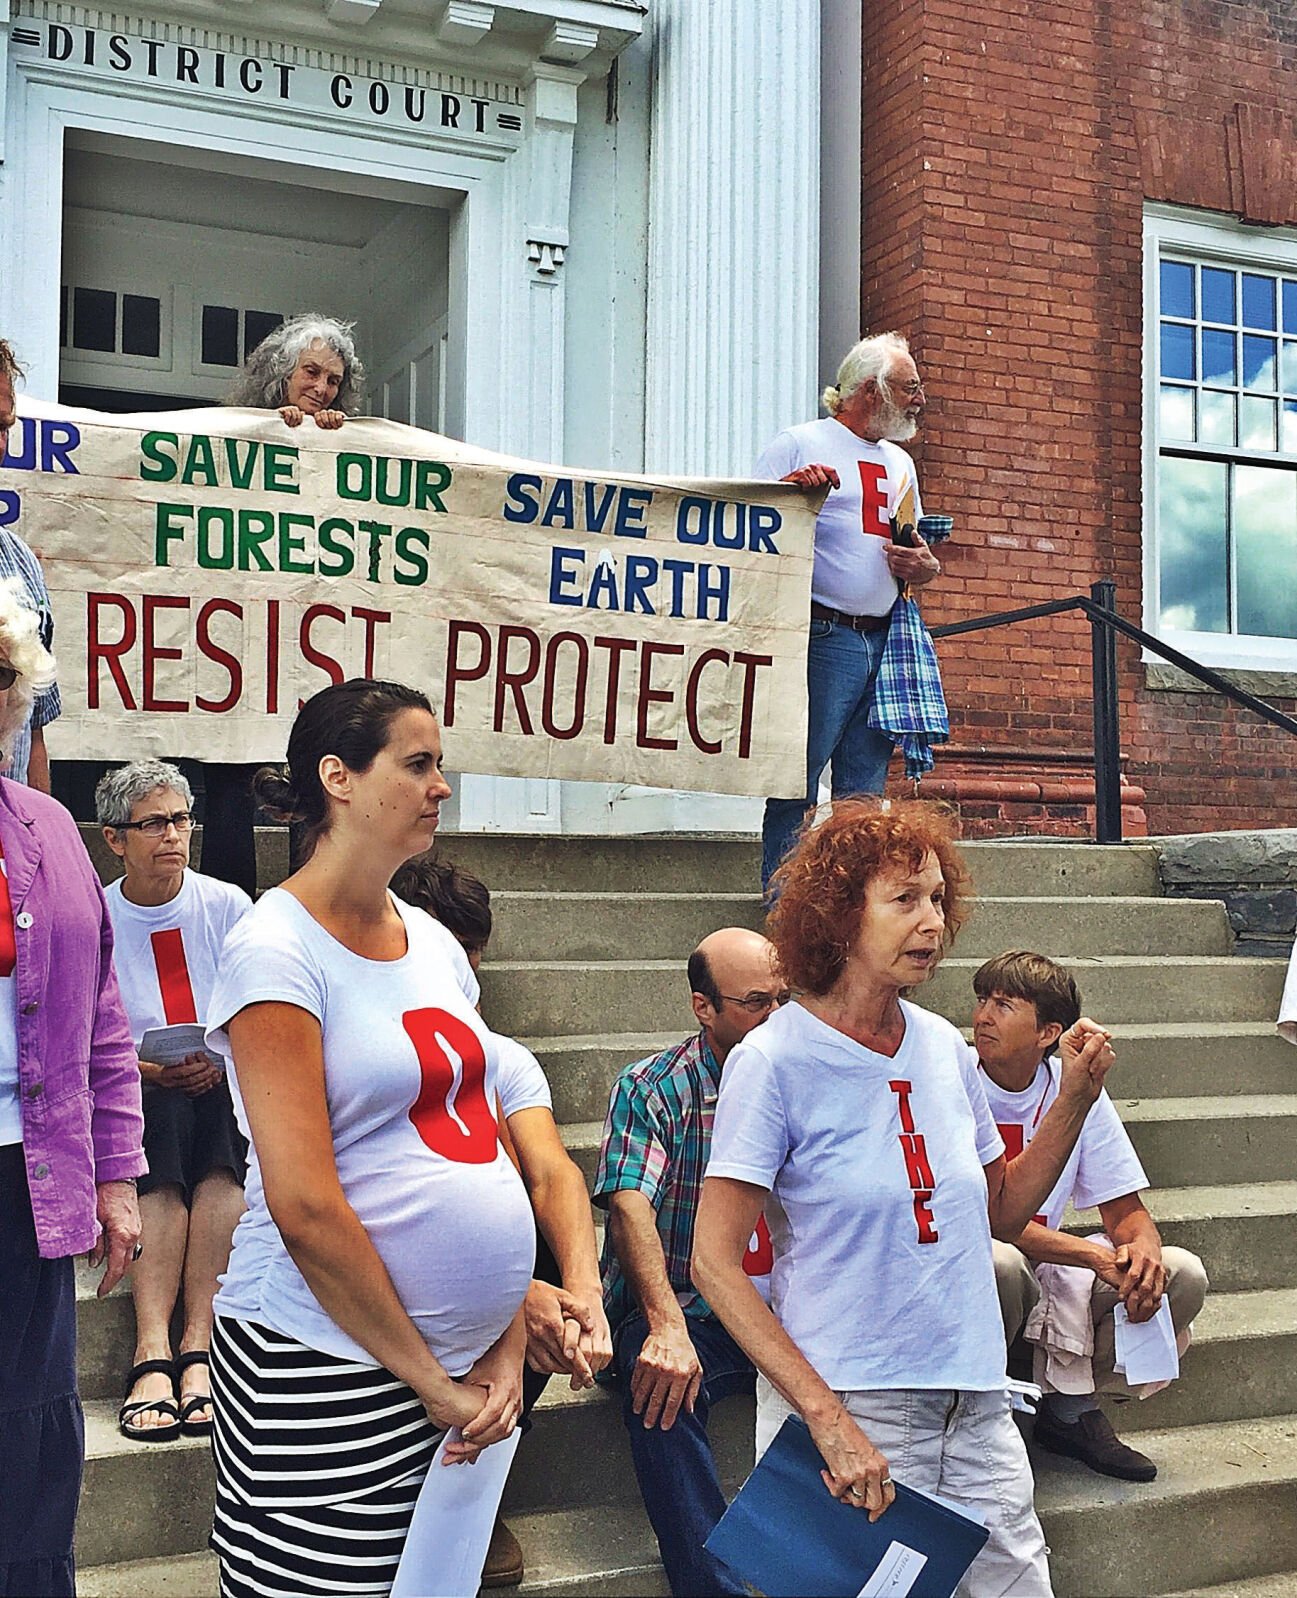 Despite trespassing arrests, Sugar Shack Alliance members vow to begin 'summer days of resistance' protest